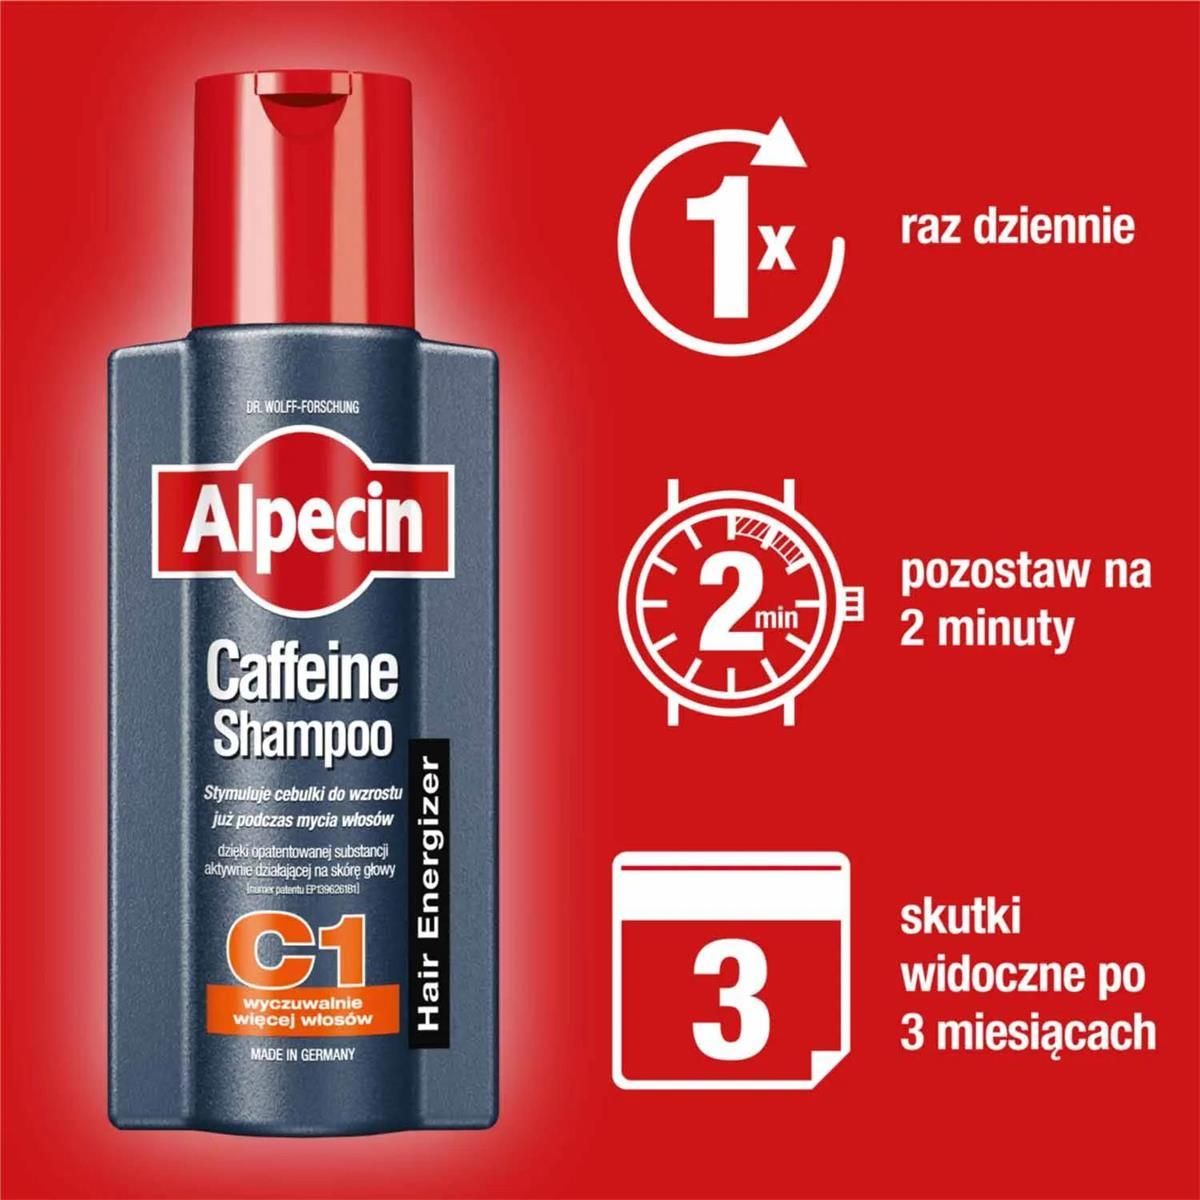 alpecin szampon ile kosztuje